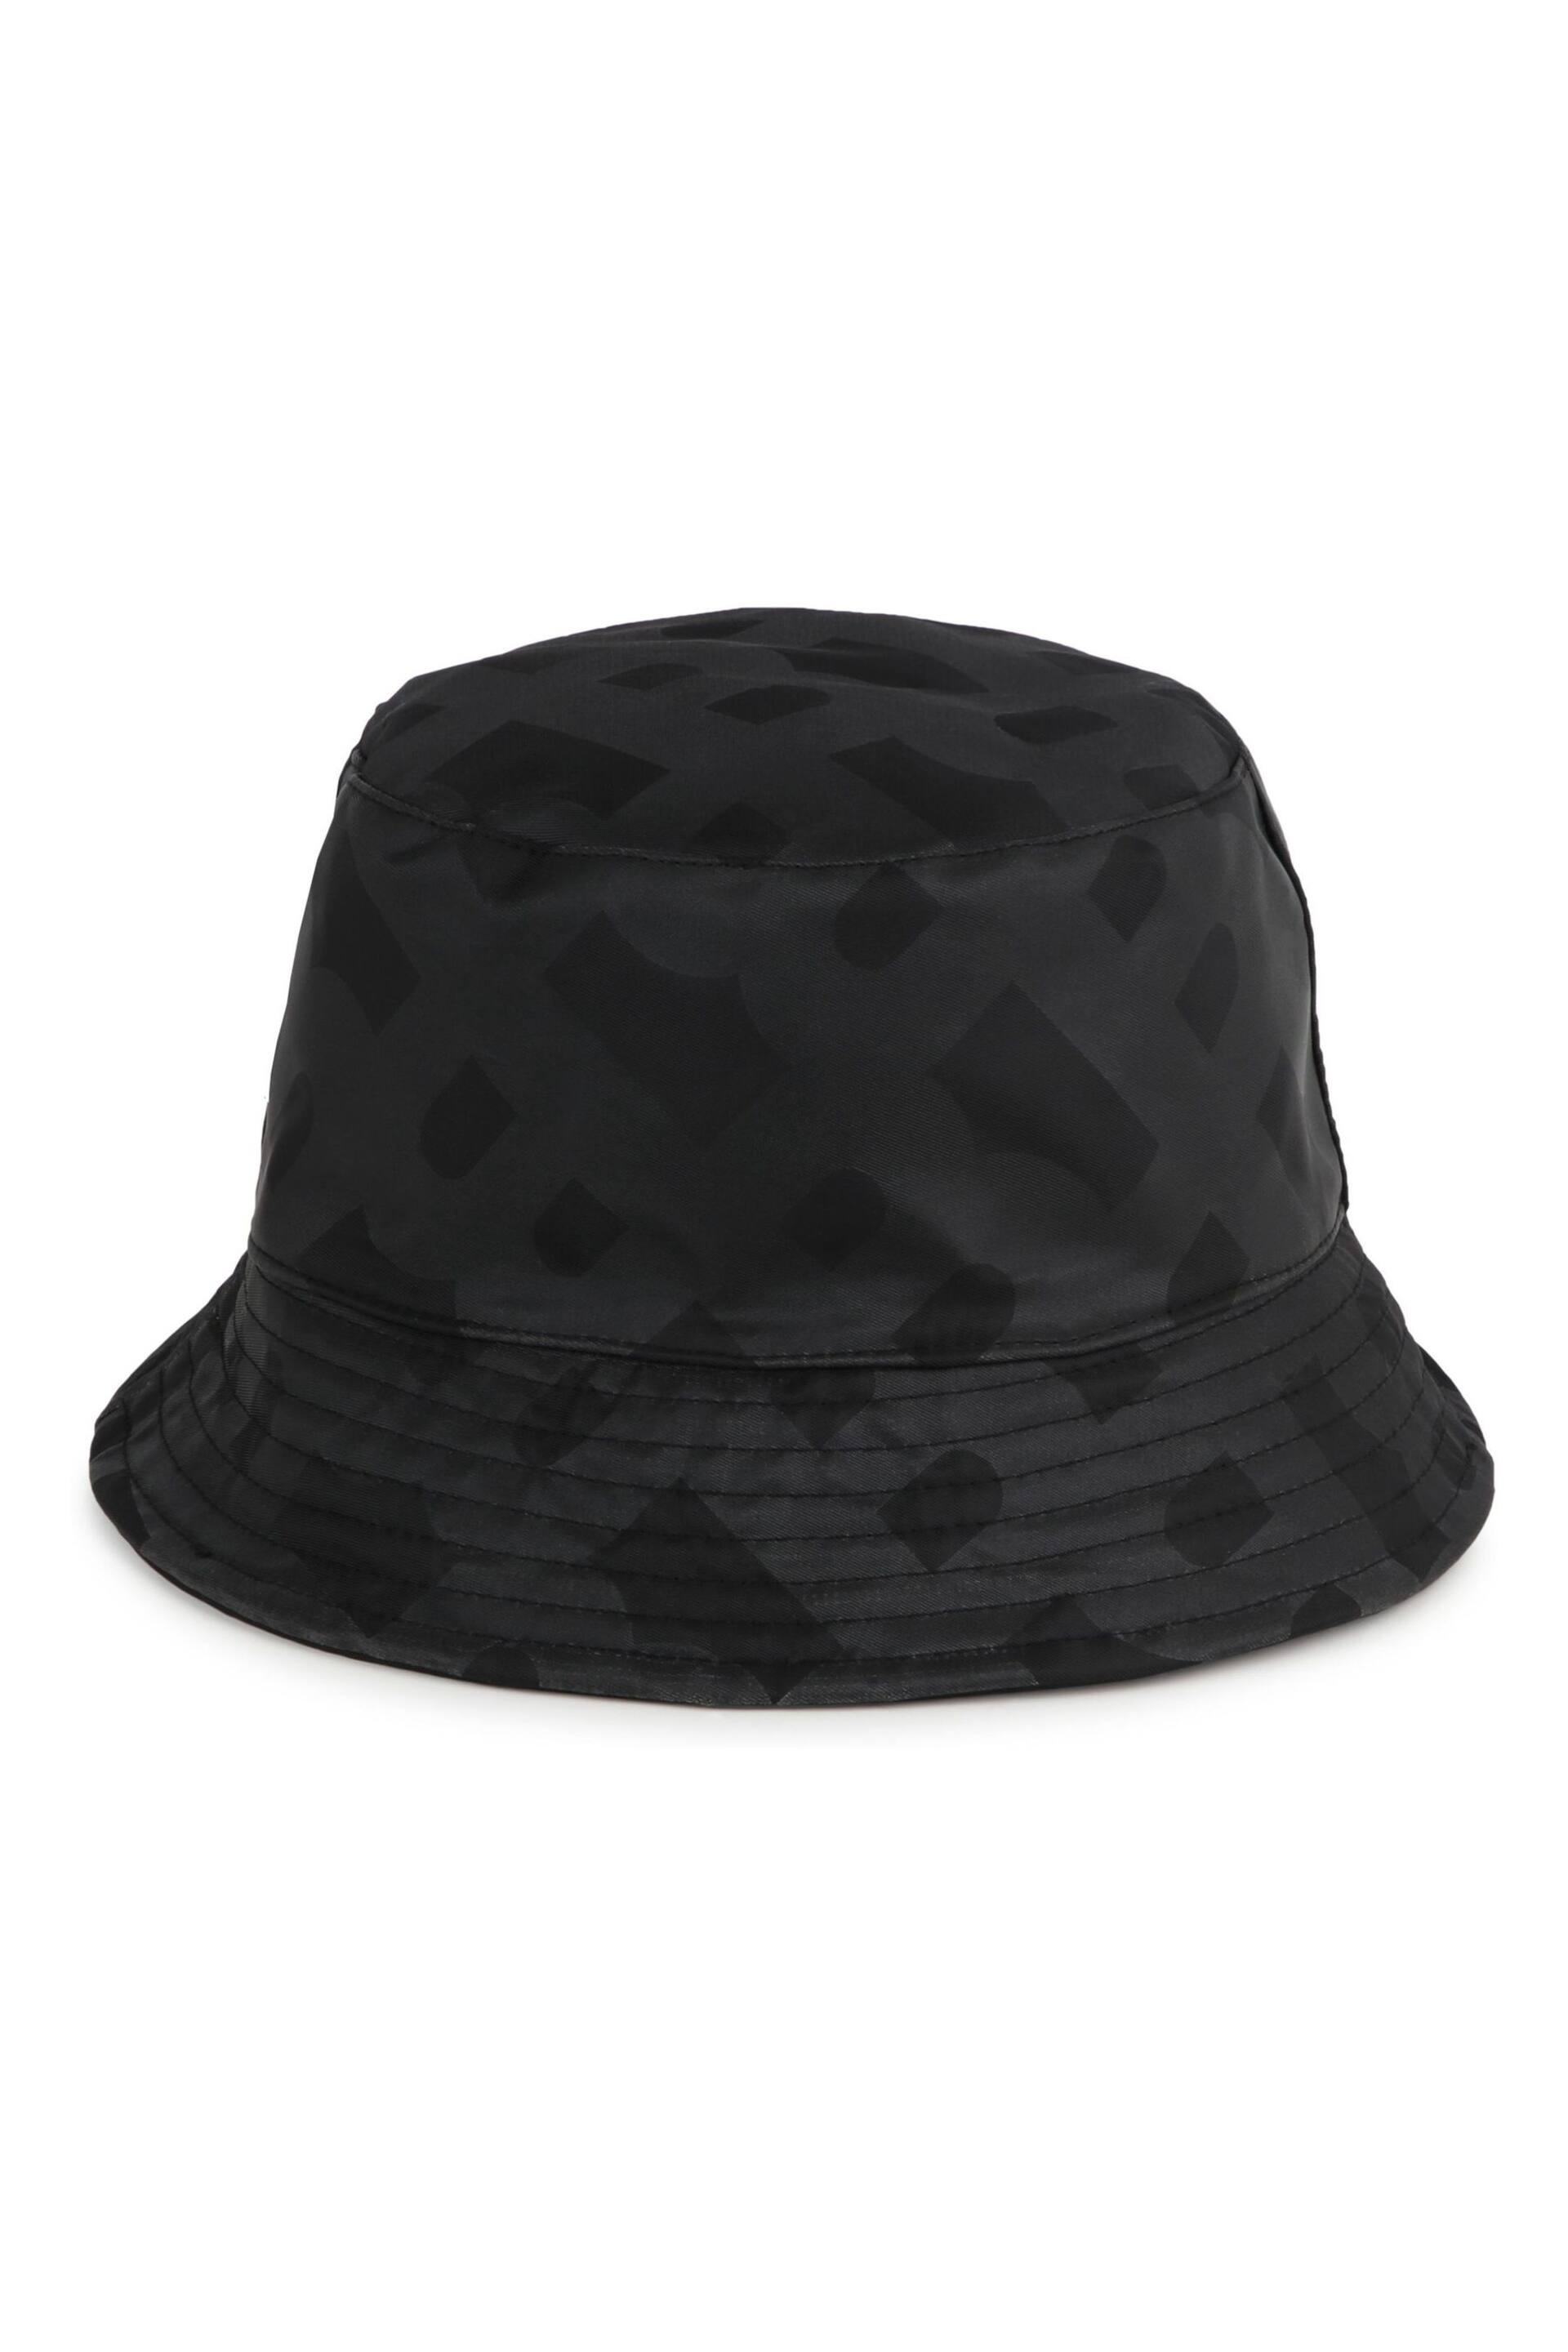 BOSS Black Logo Reversible Bucket Hat - Image 2 of 4